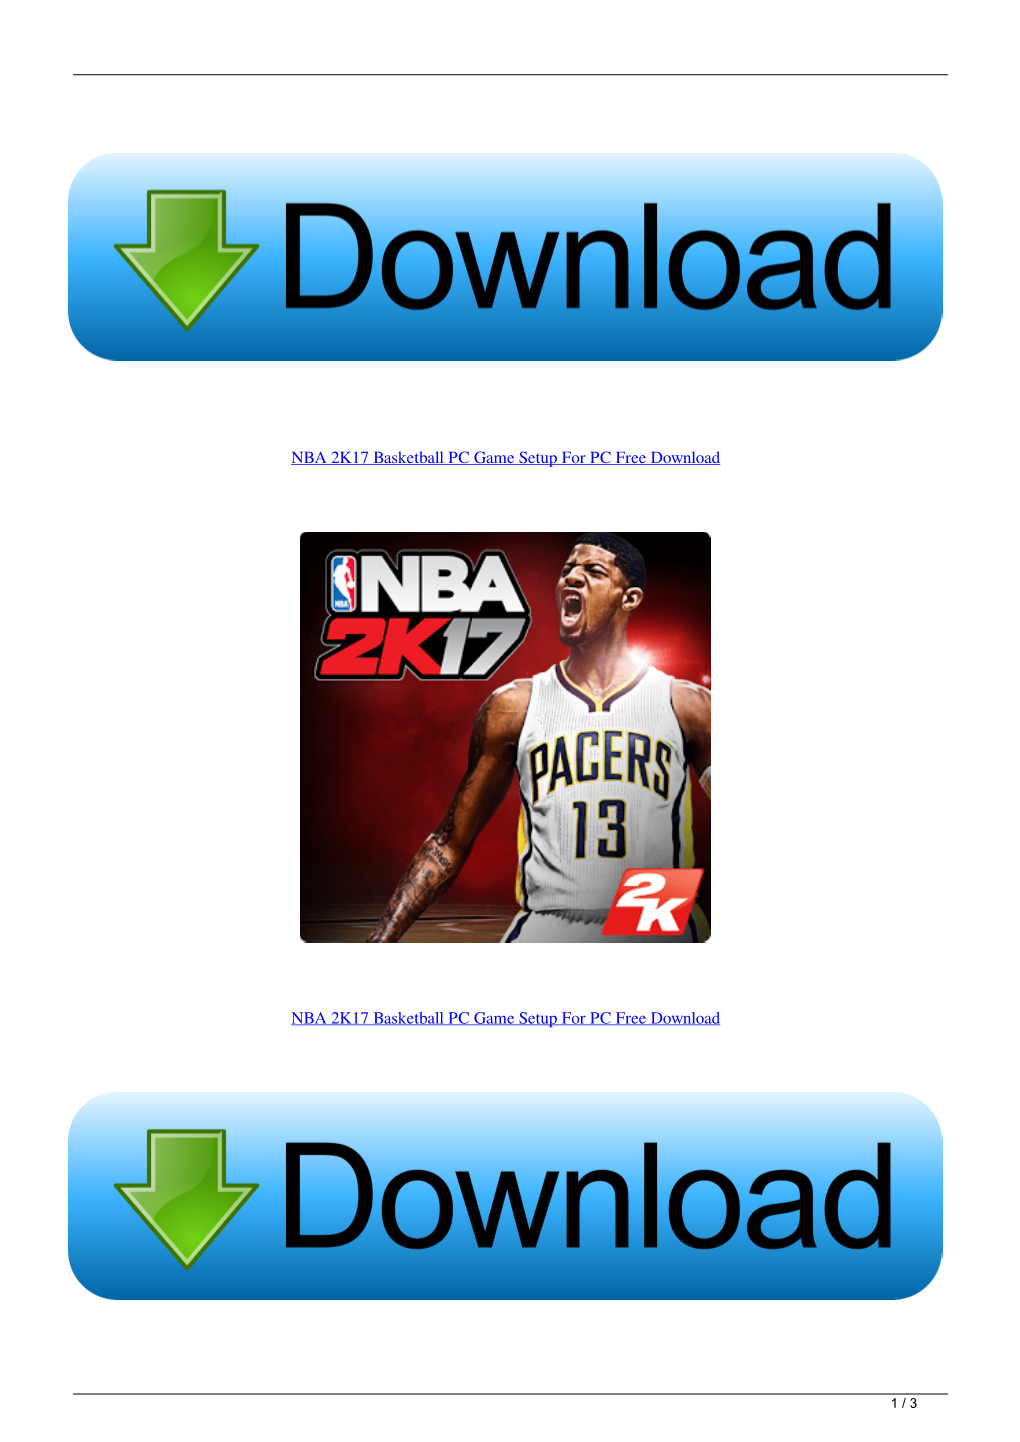 NBA 2K17 Basketball PC Game Setup for PC Free Download